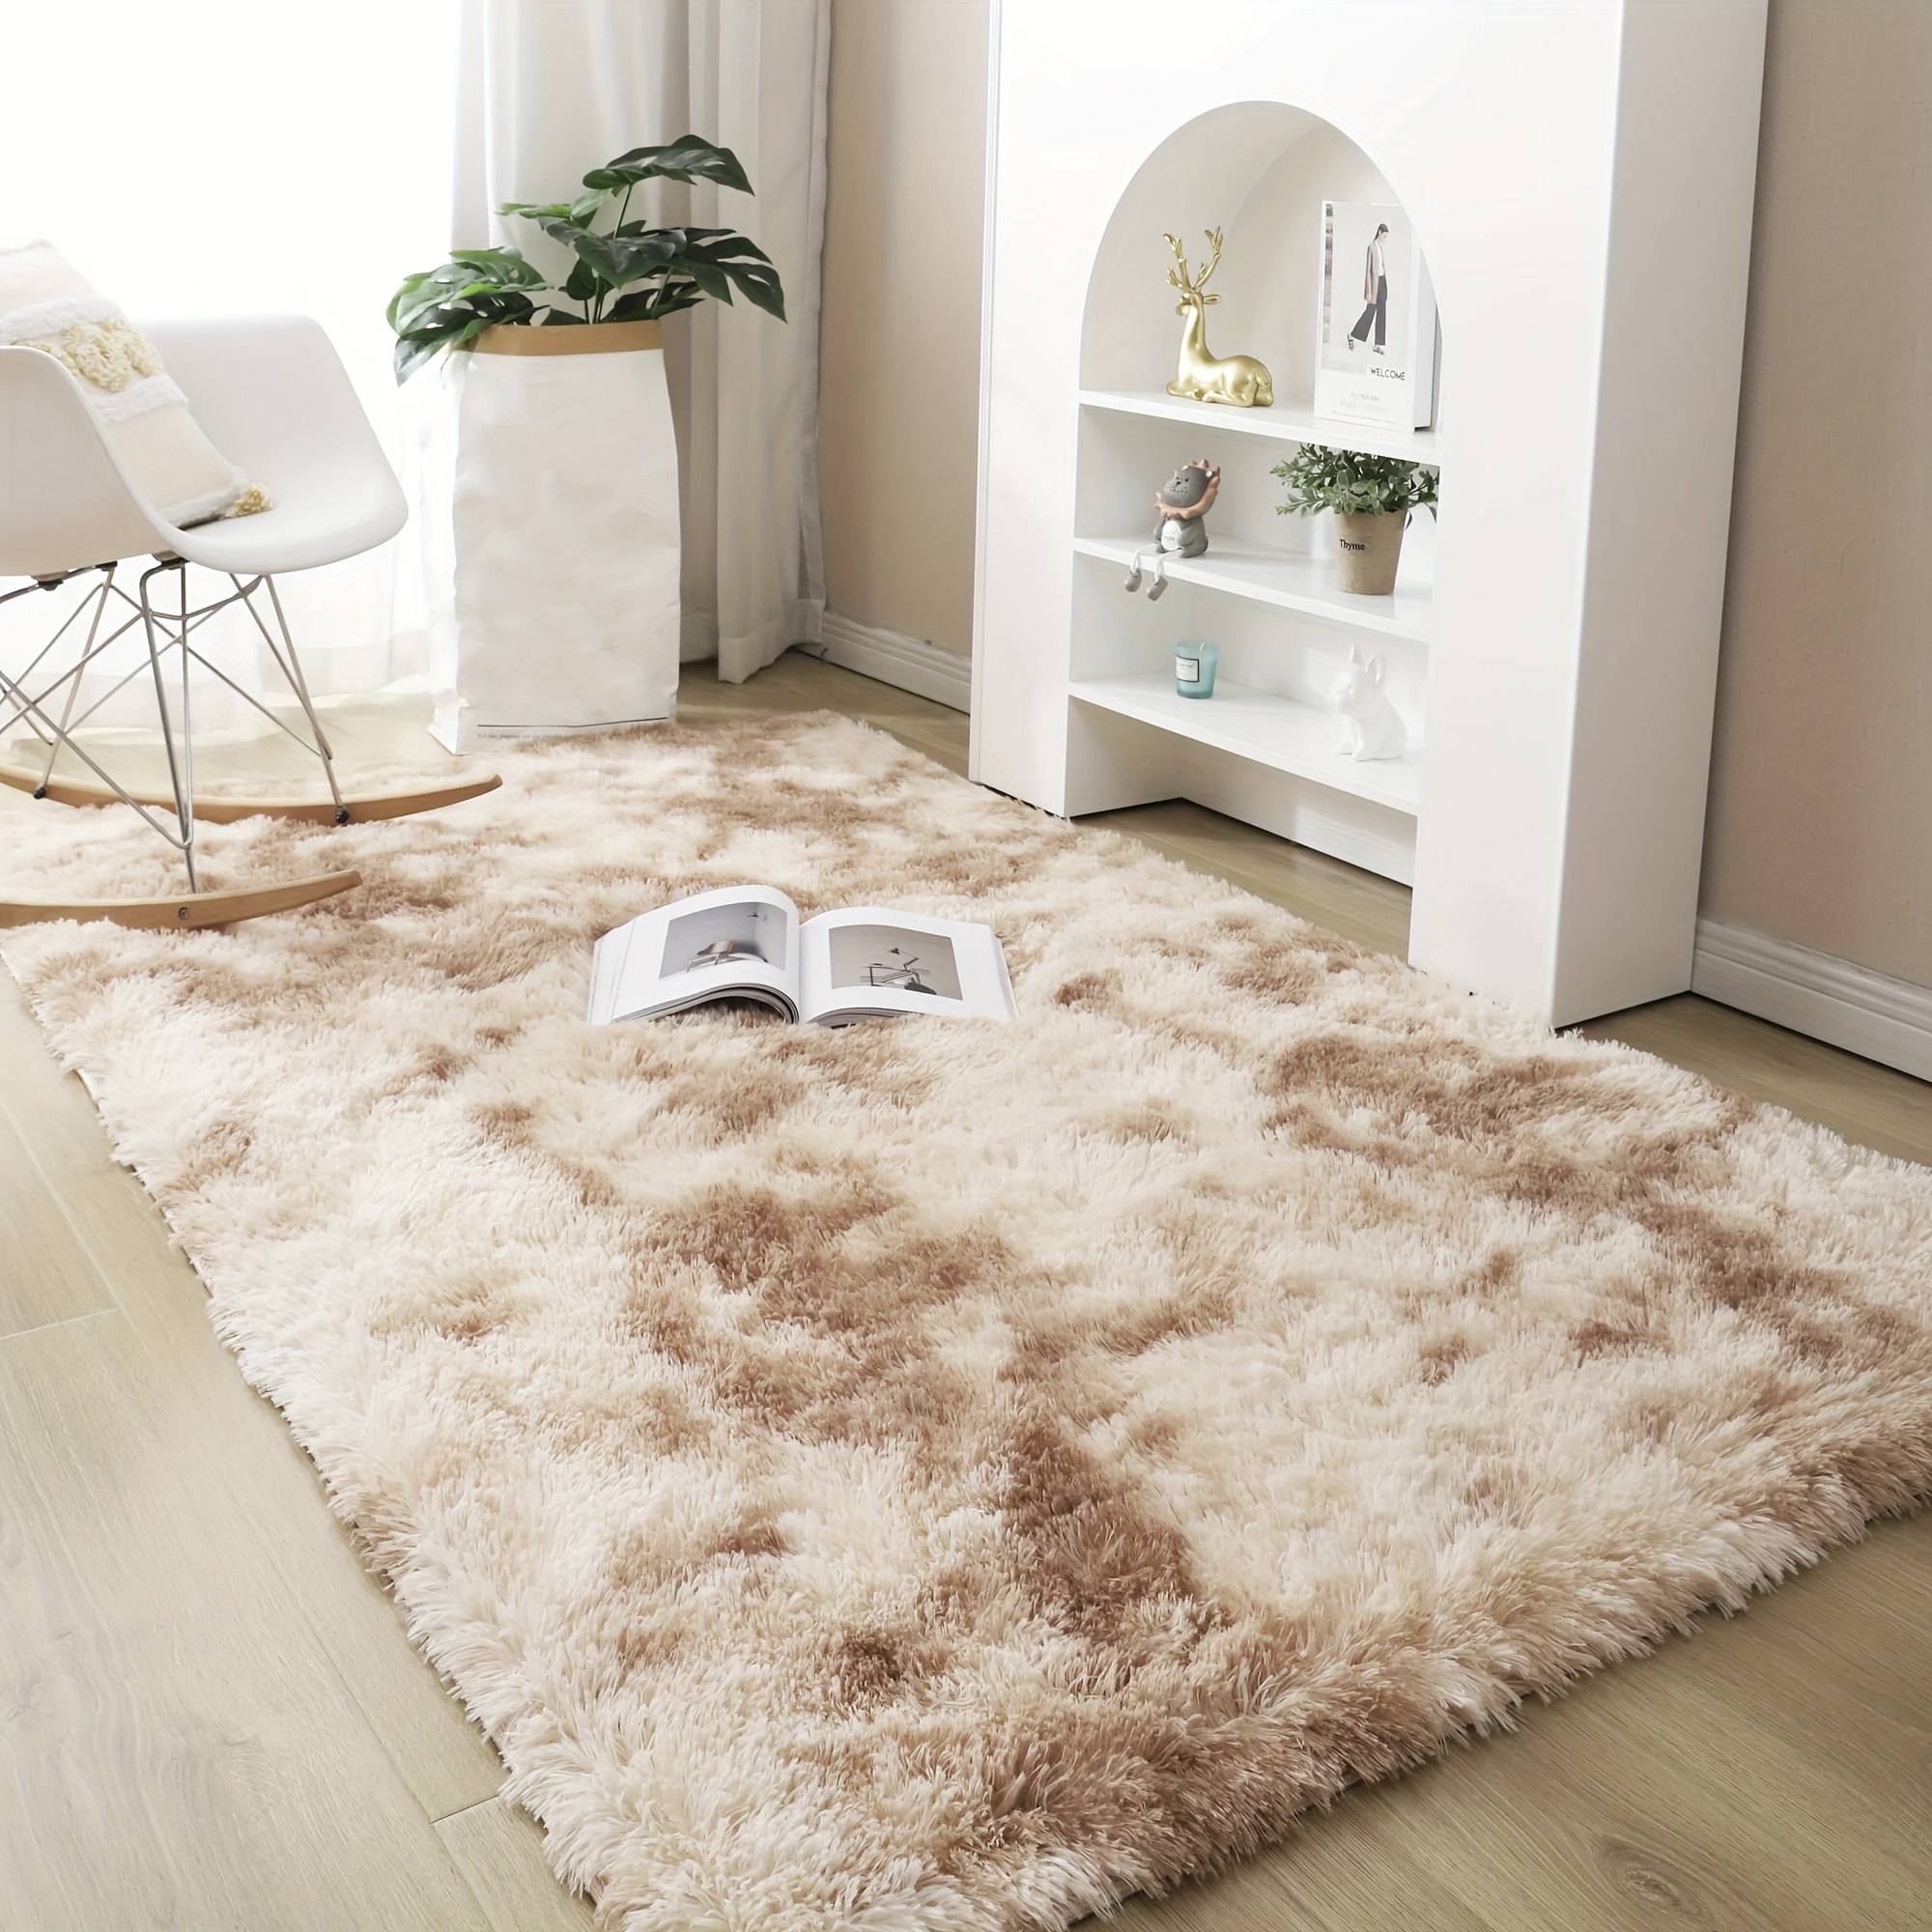 Supreme New Fashion Area Rug Carpet Living Room Rug Us Gift Decor